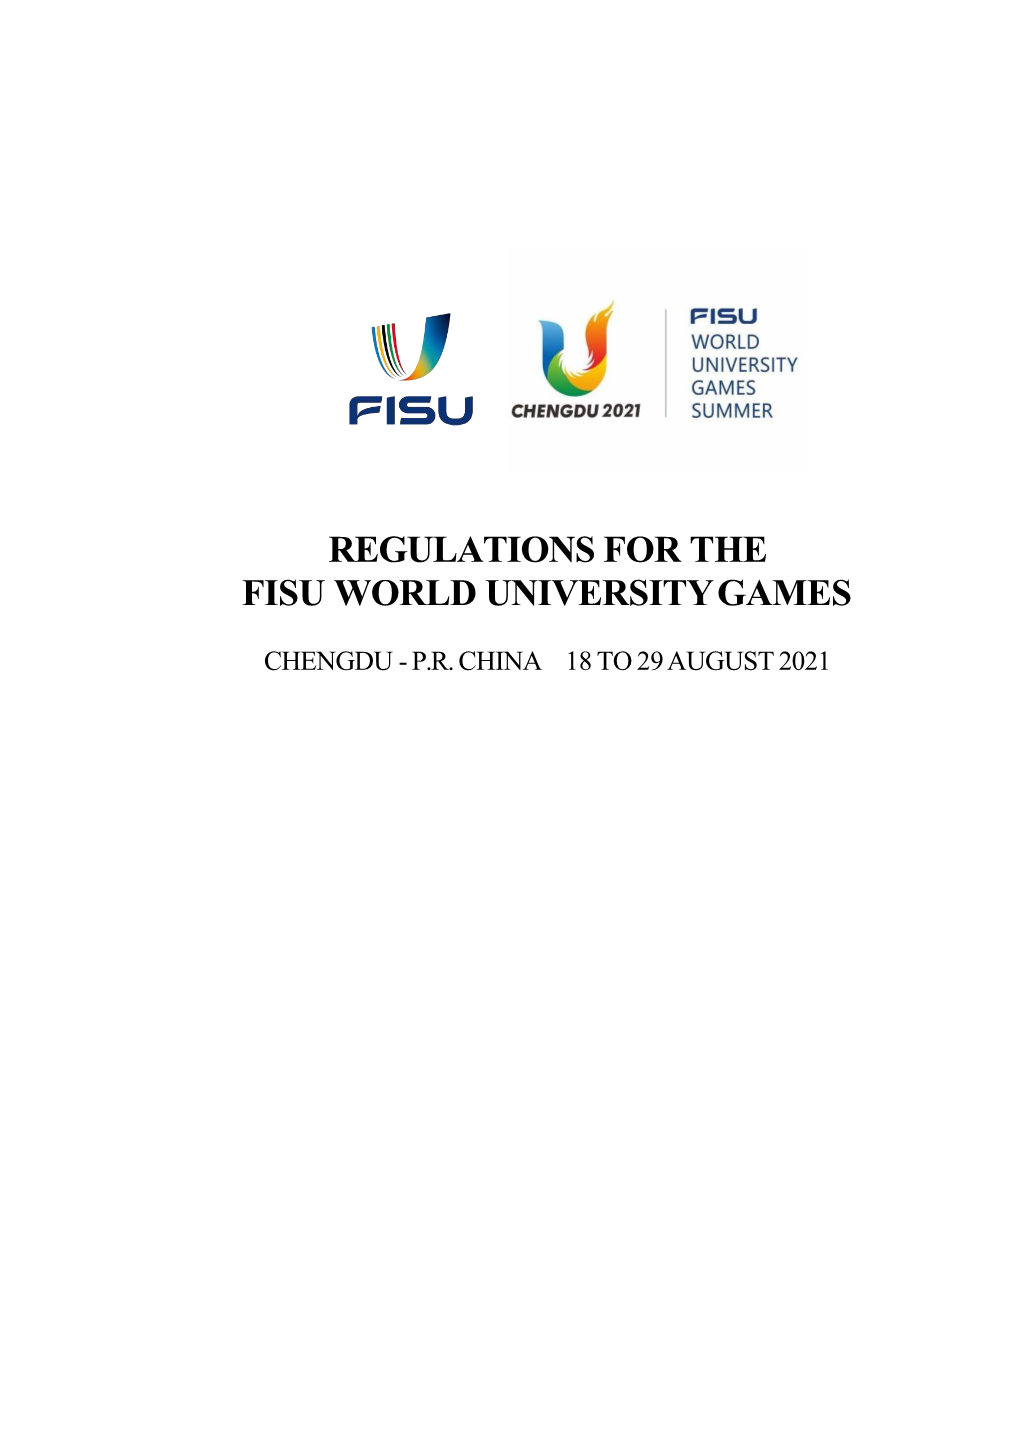 Regulations for the Fisu World University Games